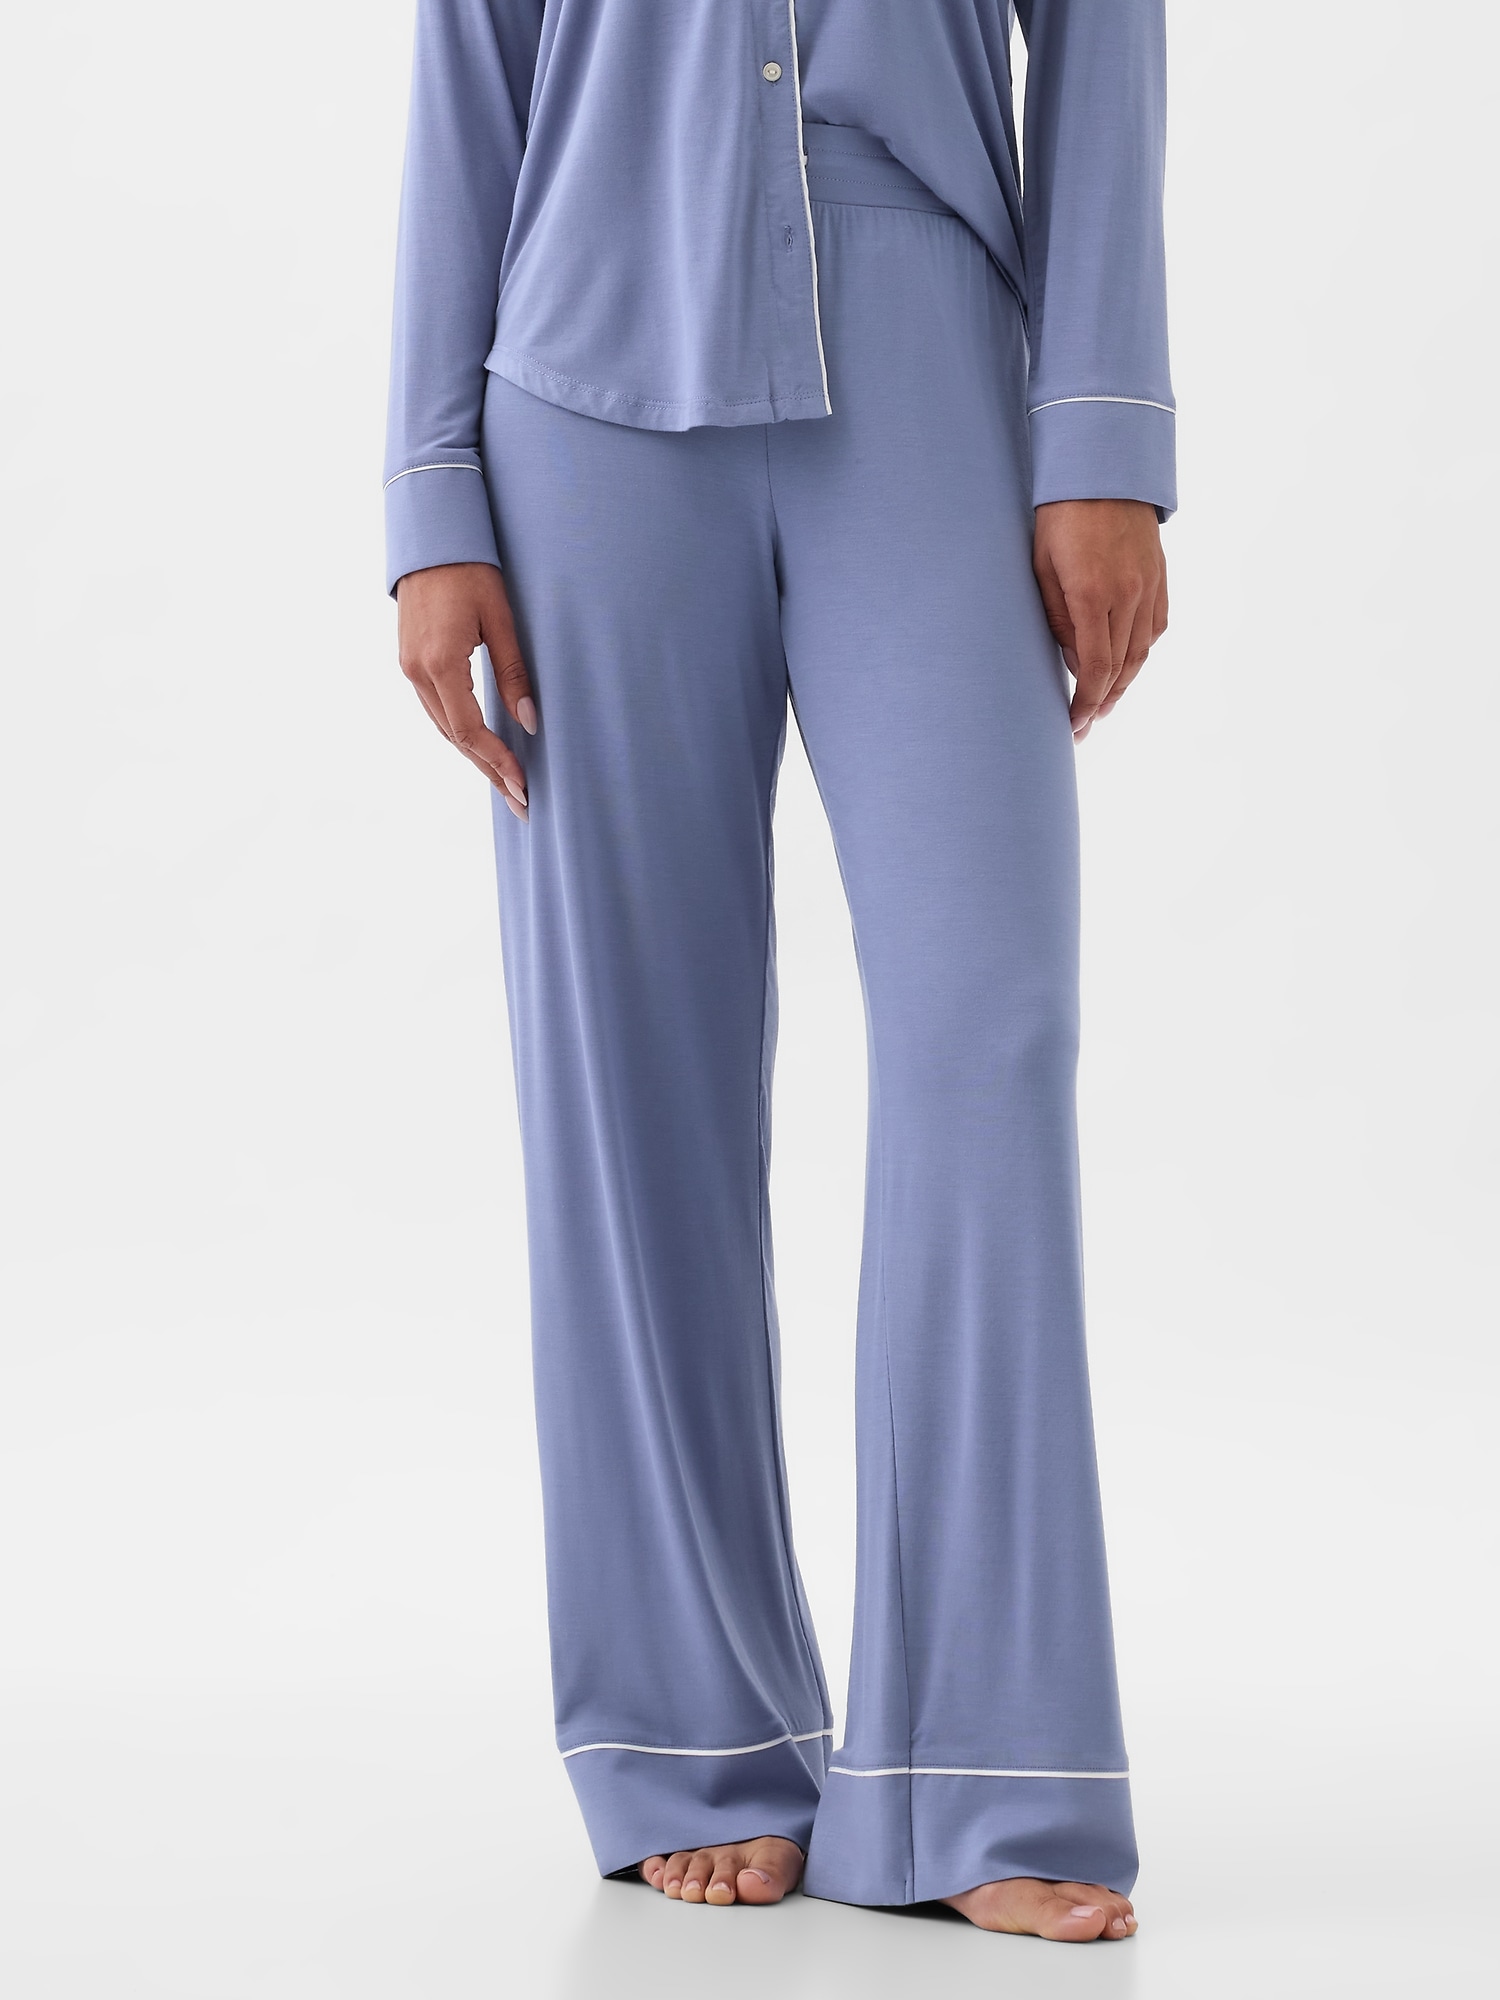 Modal Pajamas Women - Pajama Pants for Women - Comfortable, breathable,  moisture-wicking, and has pockets Dark Grey…